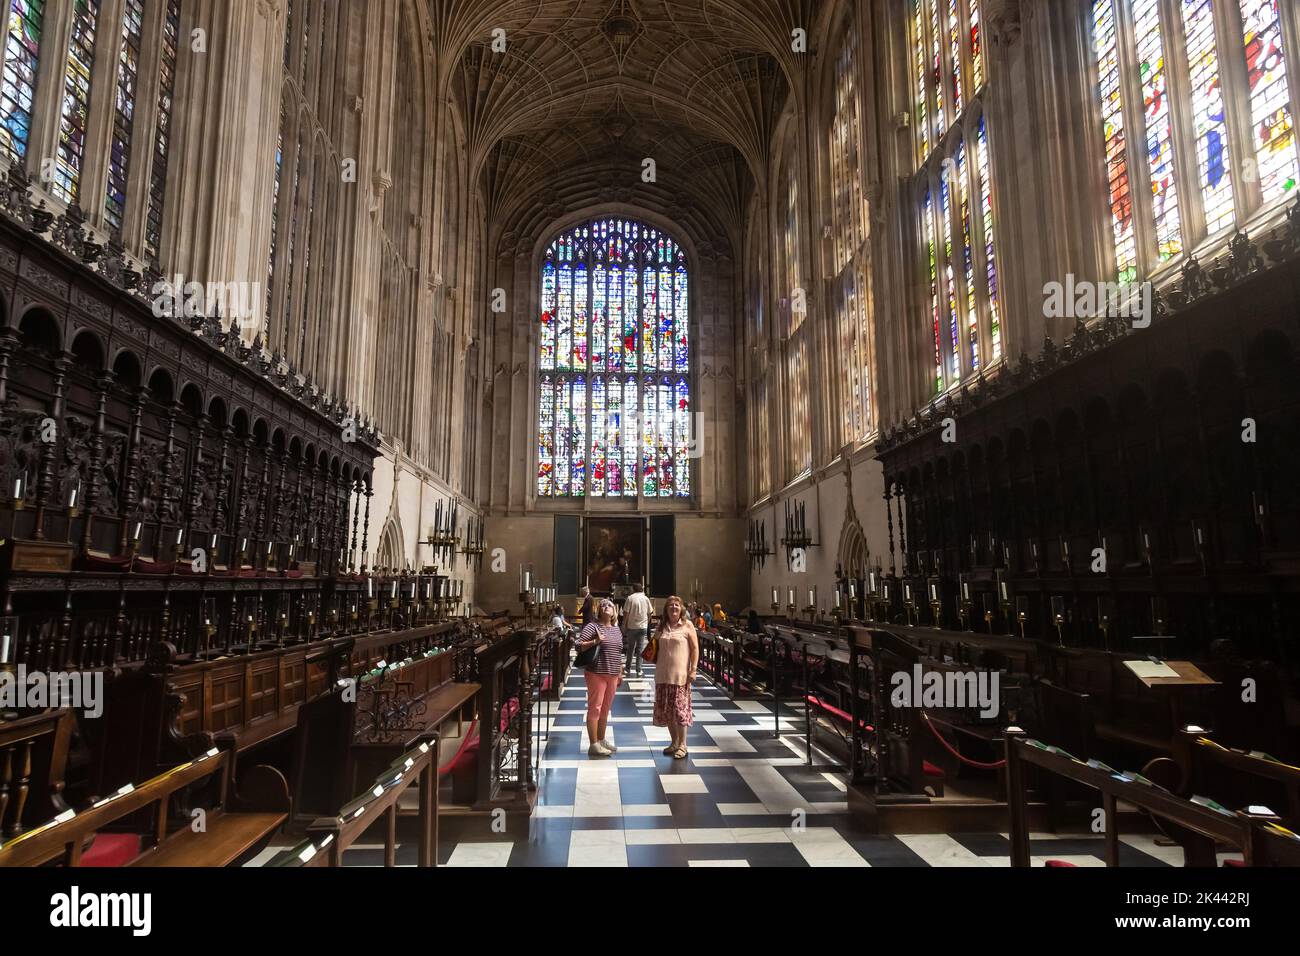 Interior of King's College Chapel, Cambridge, UK. 22/6/22 Stock Photo